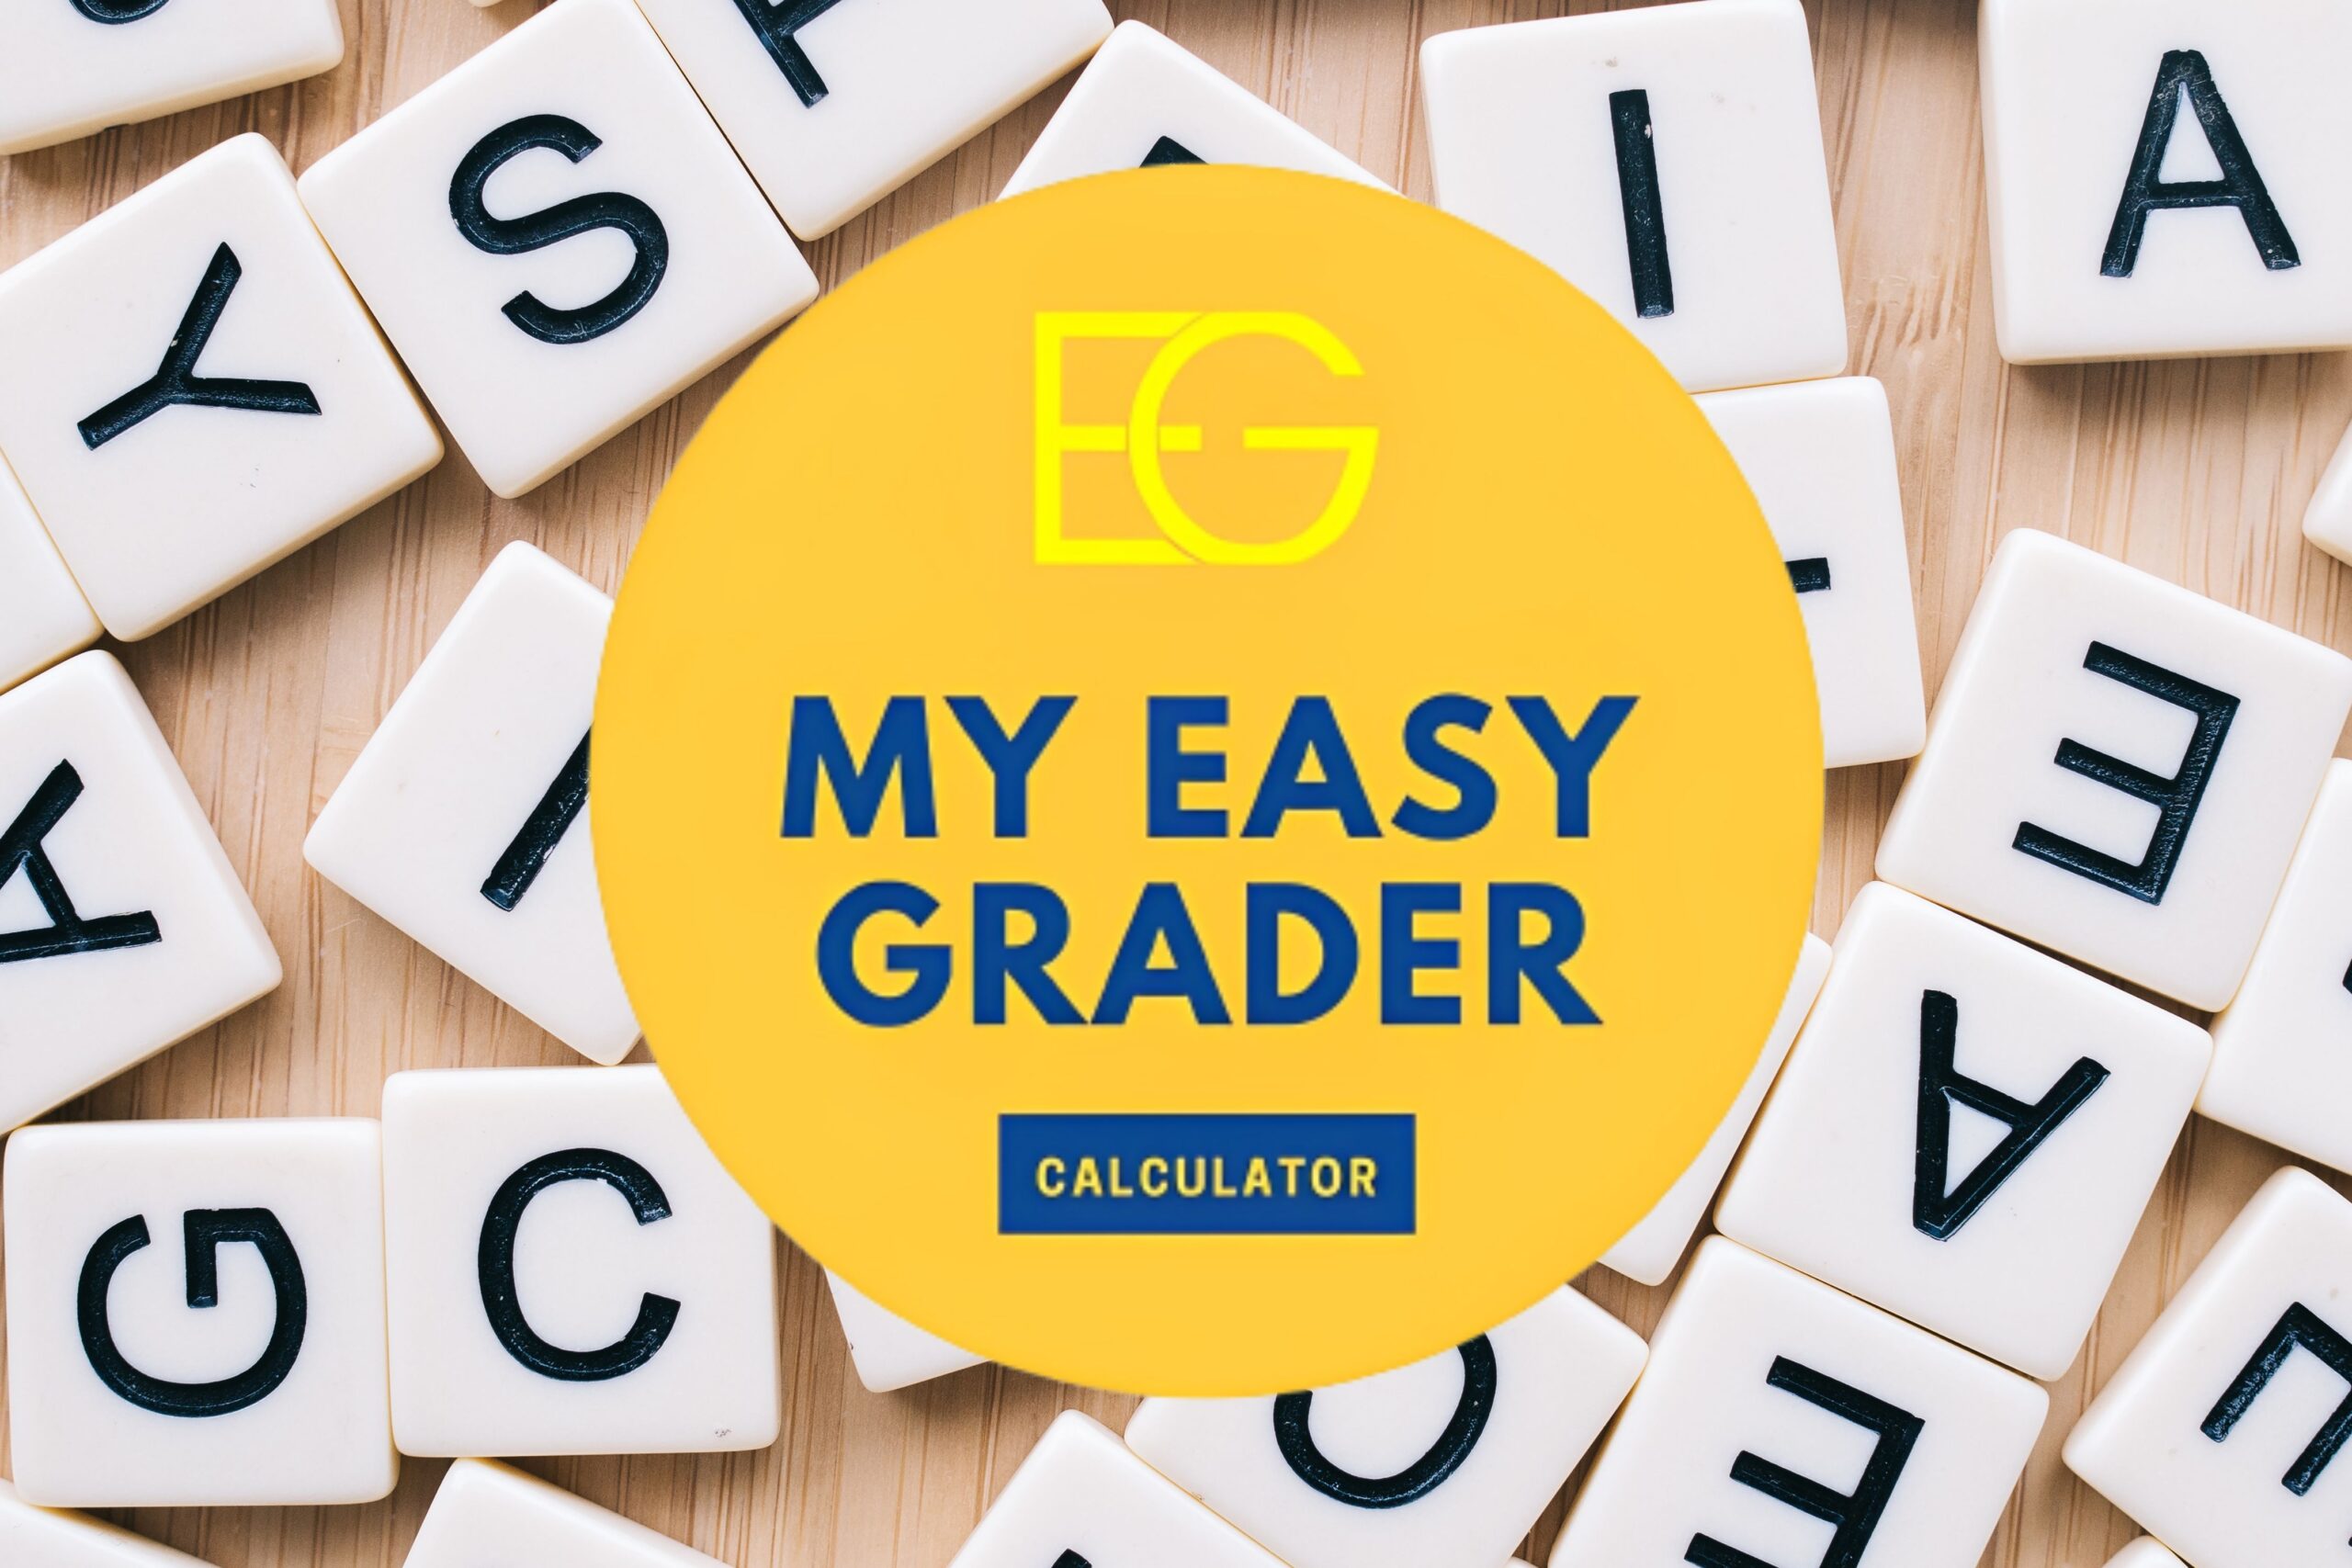 My Easy Grader Calculator for Grading English